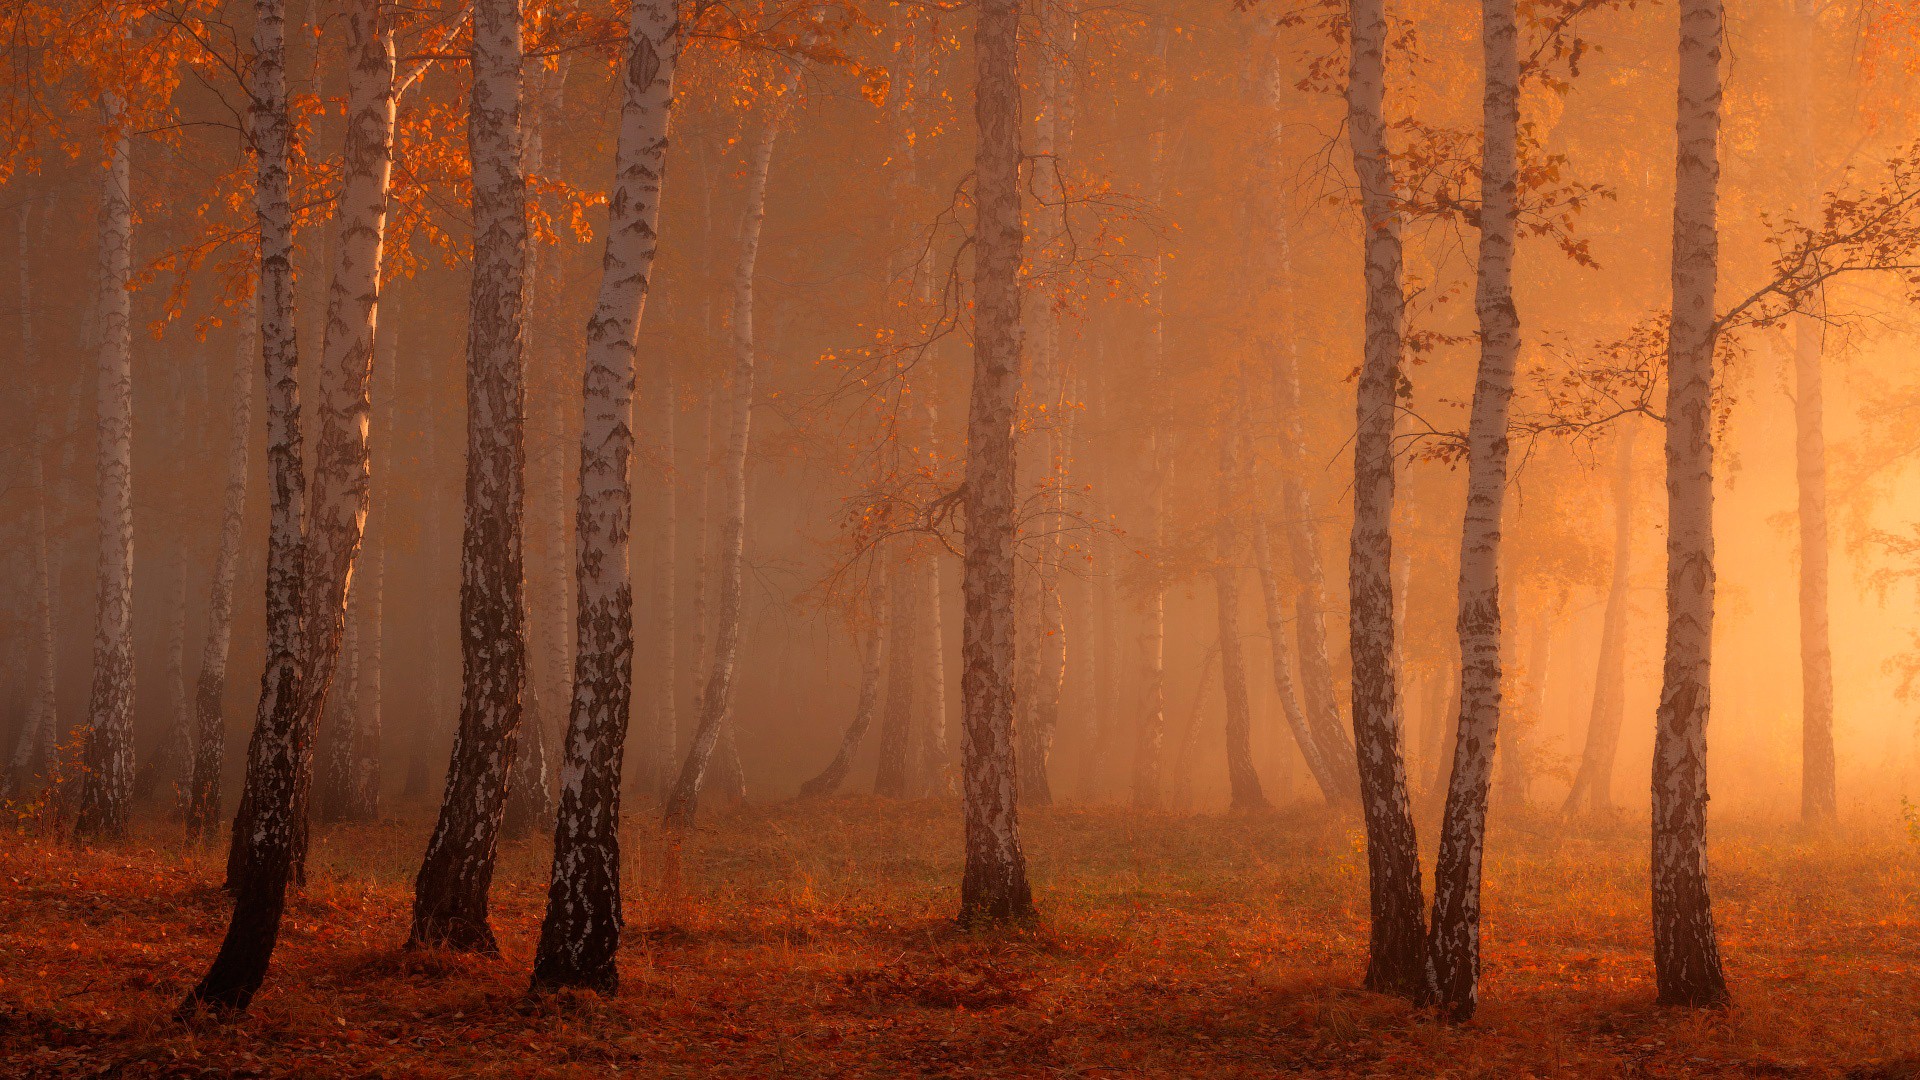 General 1920x1080 forest nature sunlight trees fall orange mist birch